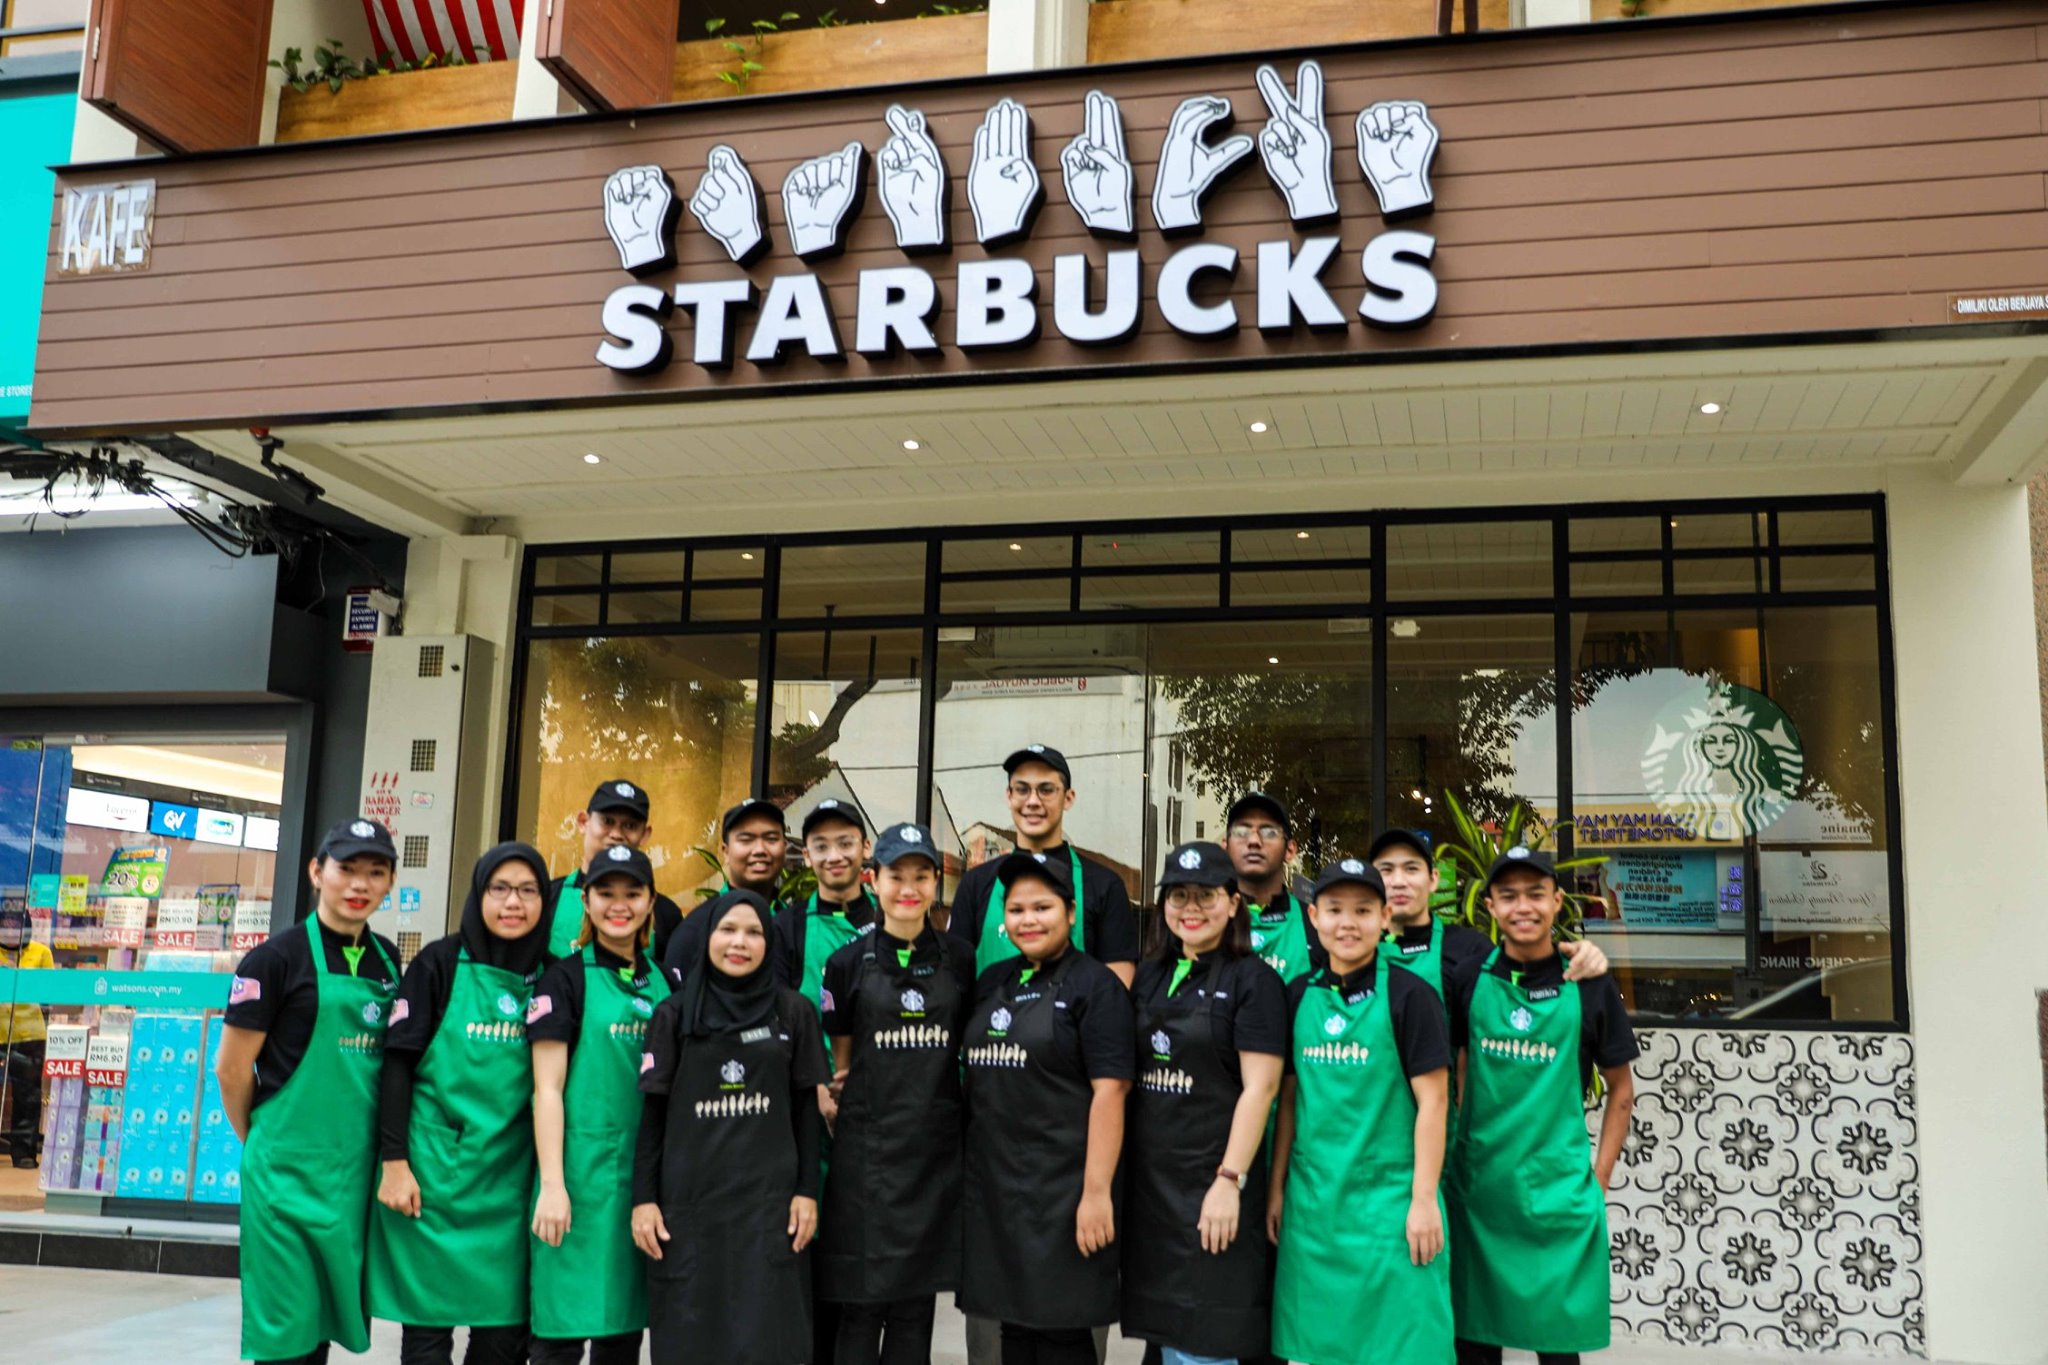 Starbucks staff posing outside the store